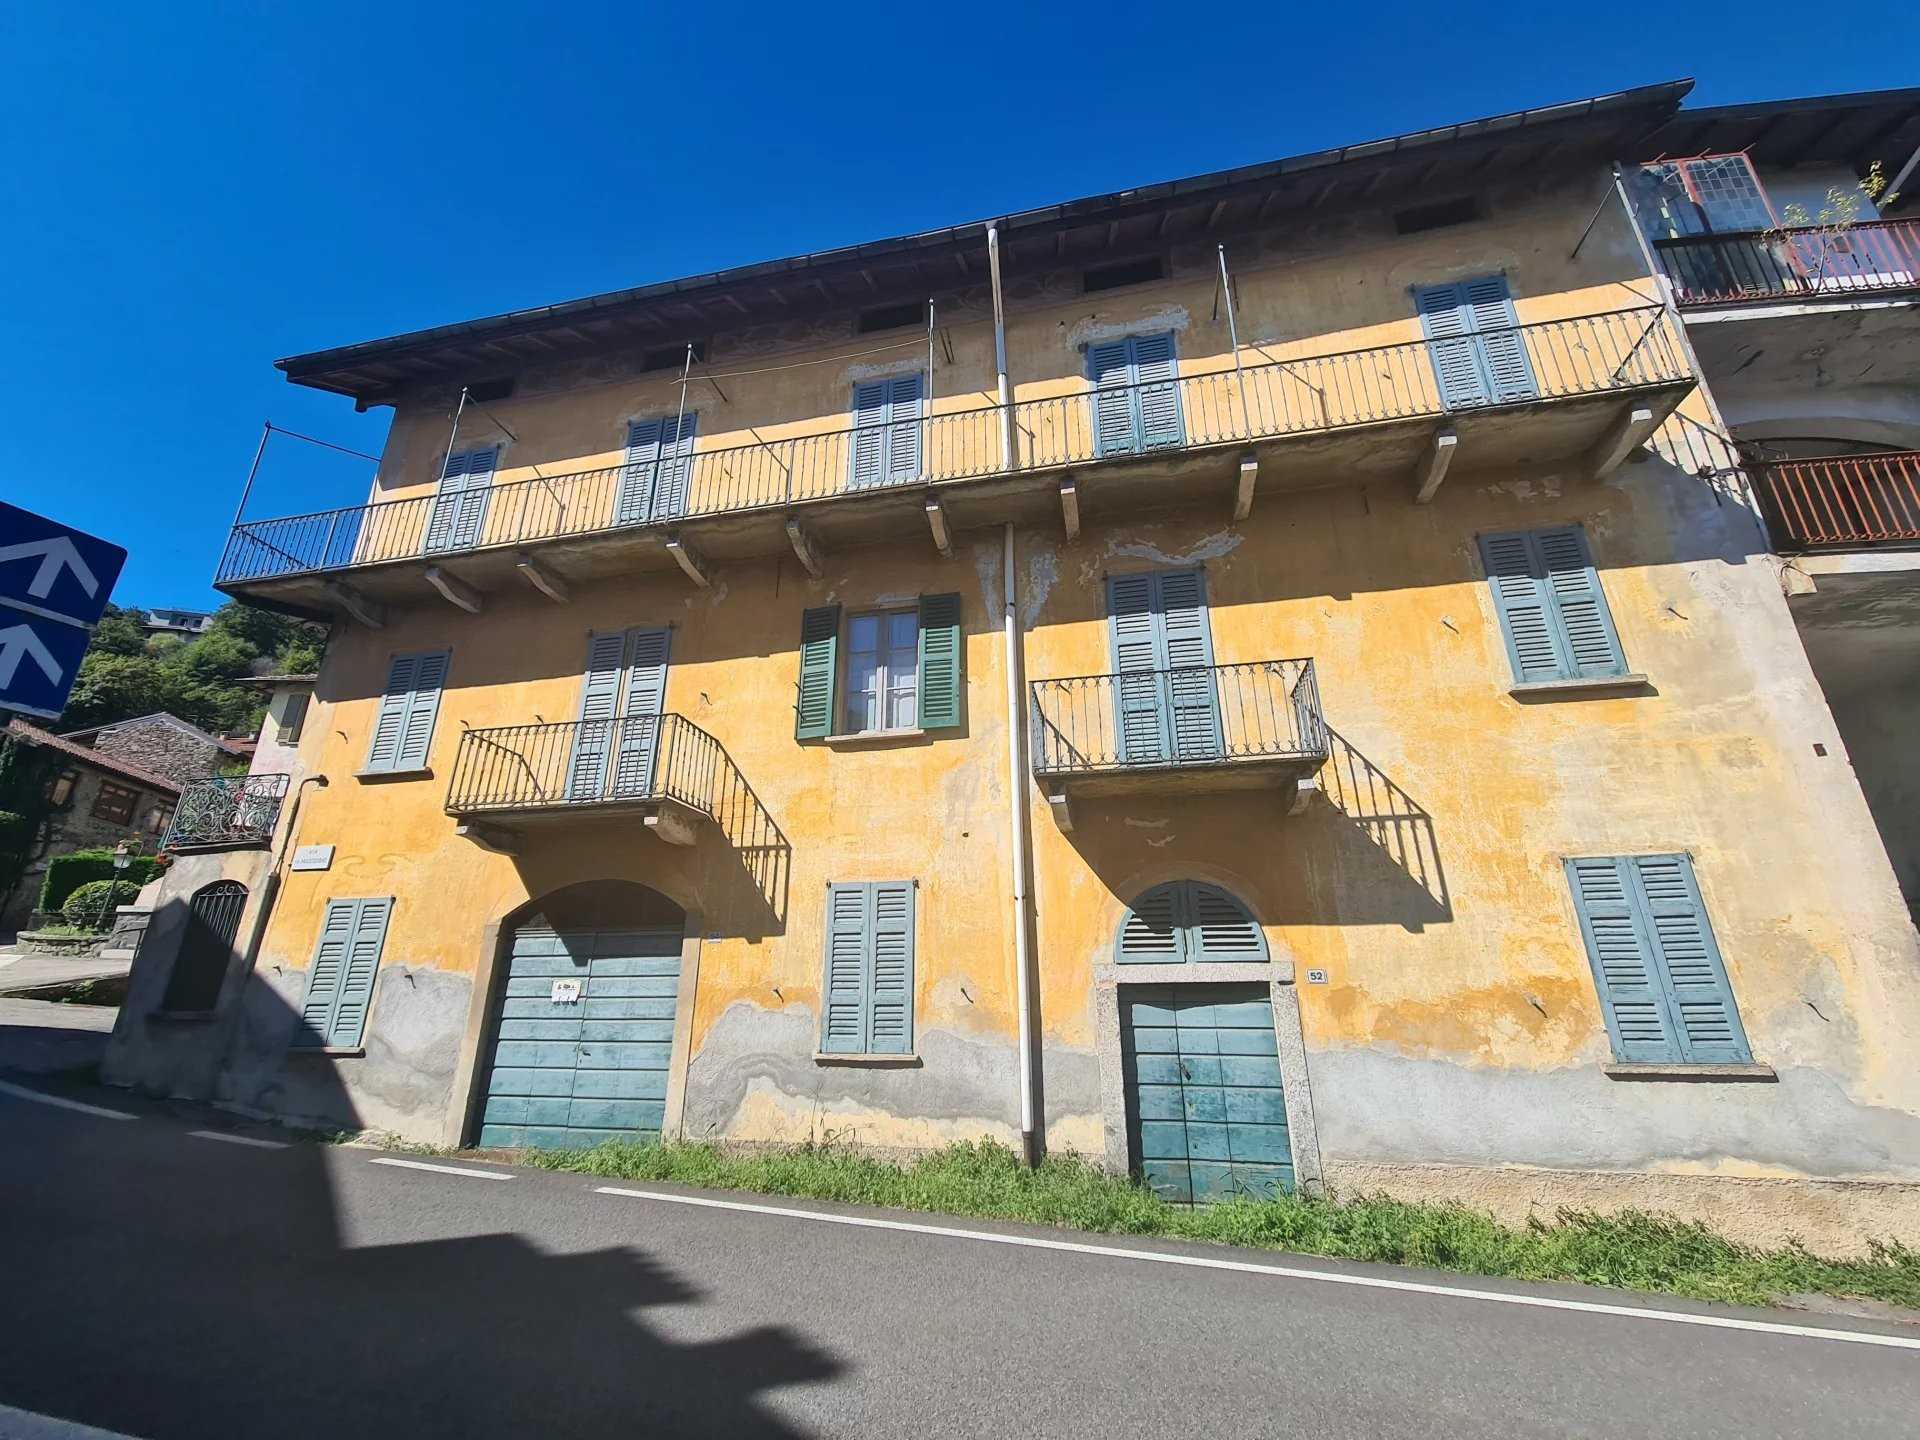 Fotos Historisches Dorfhaus mit Seeblick am Lago Maggiore